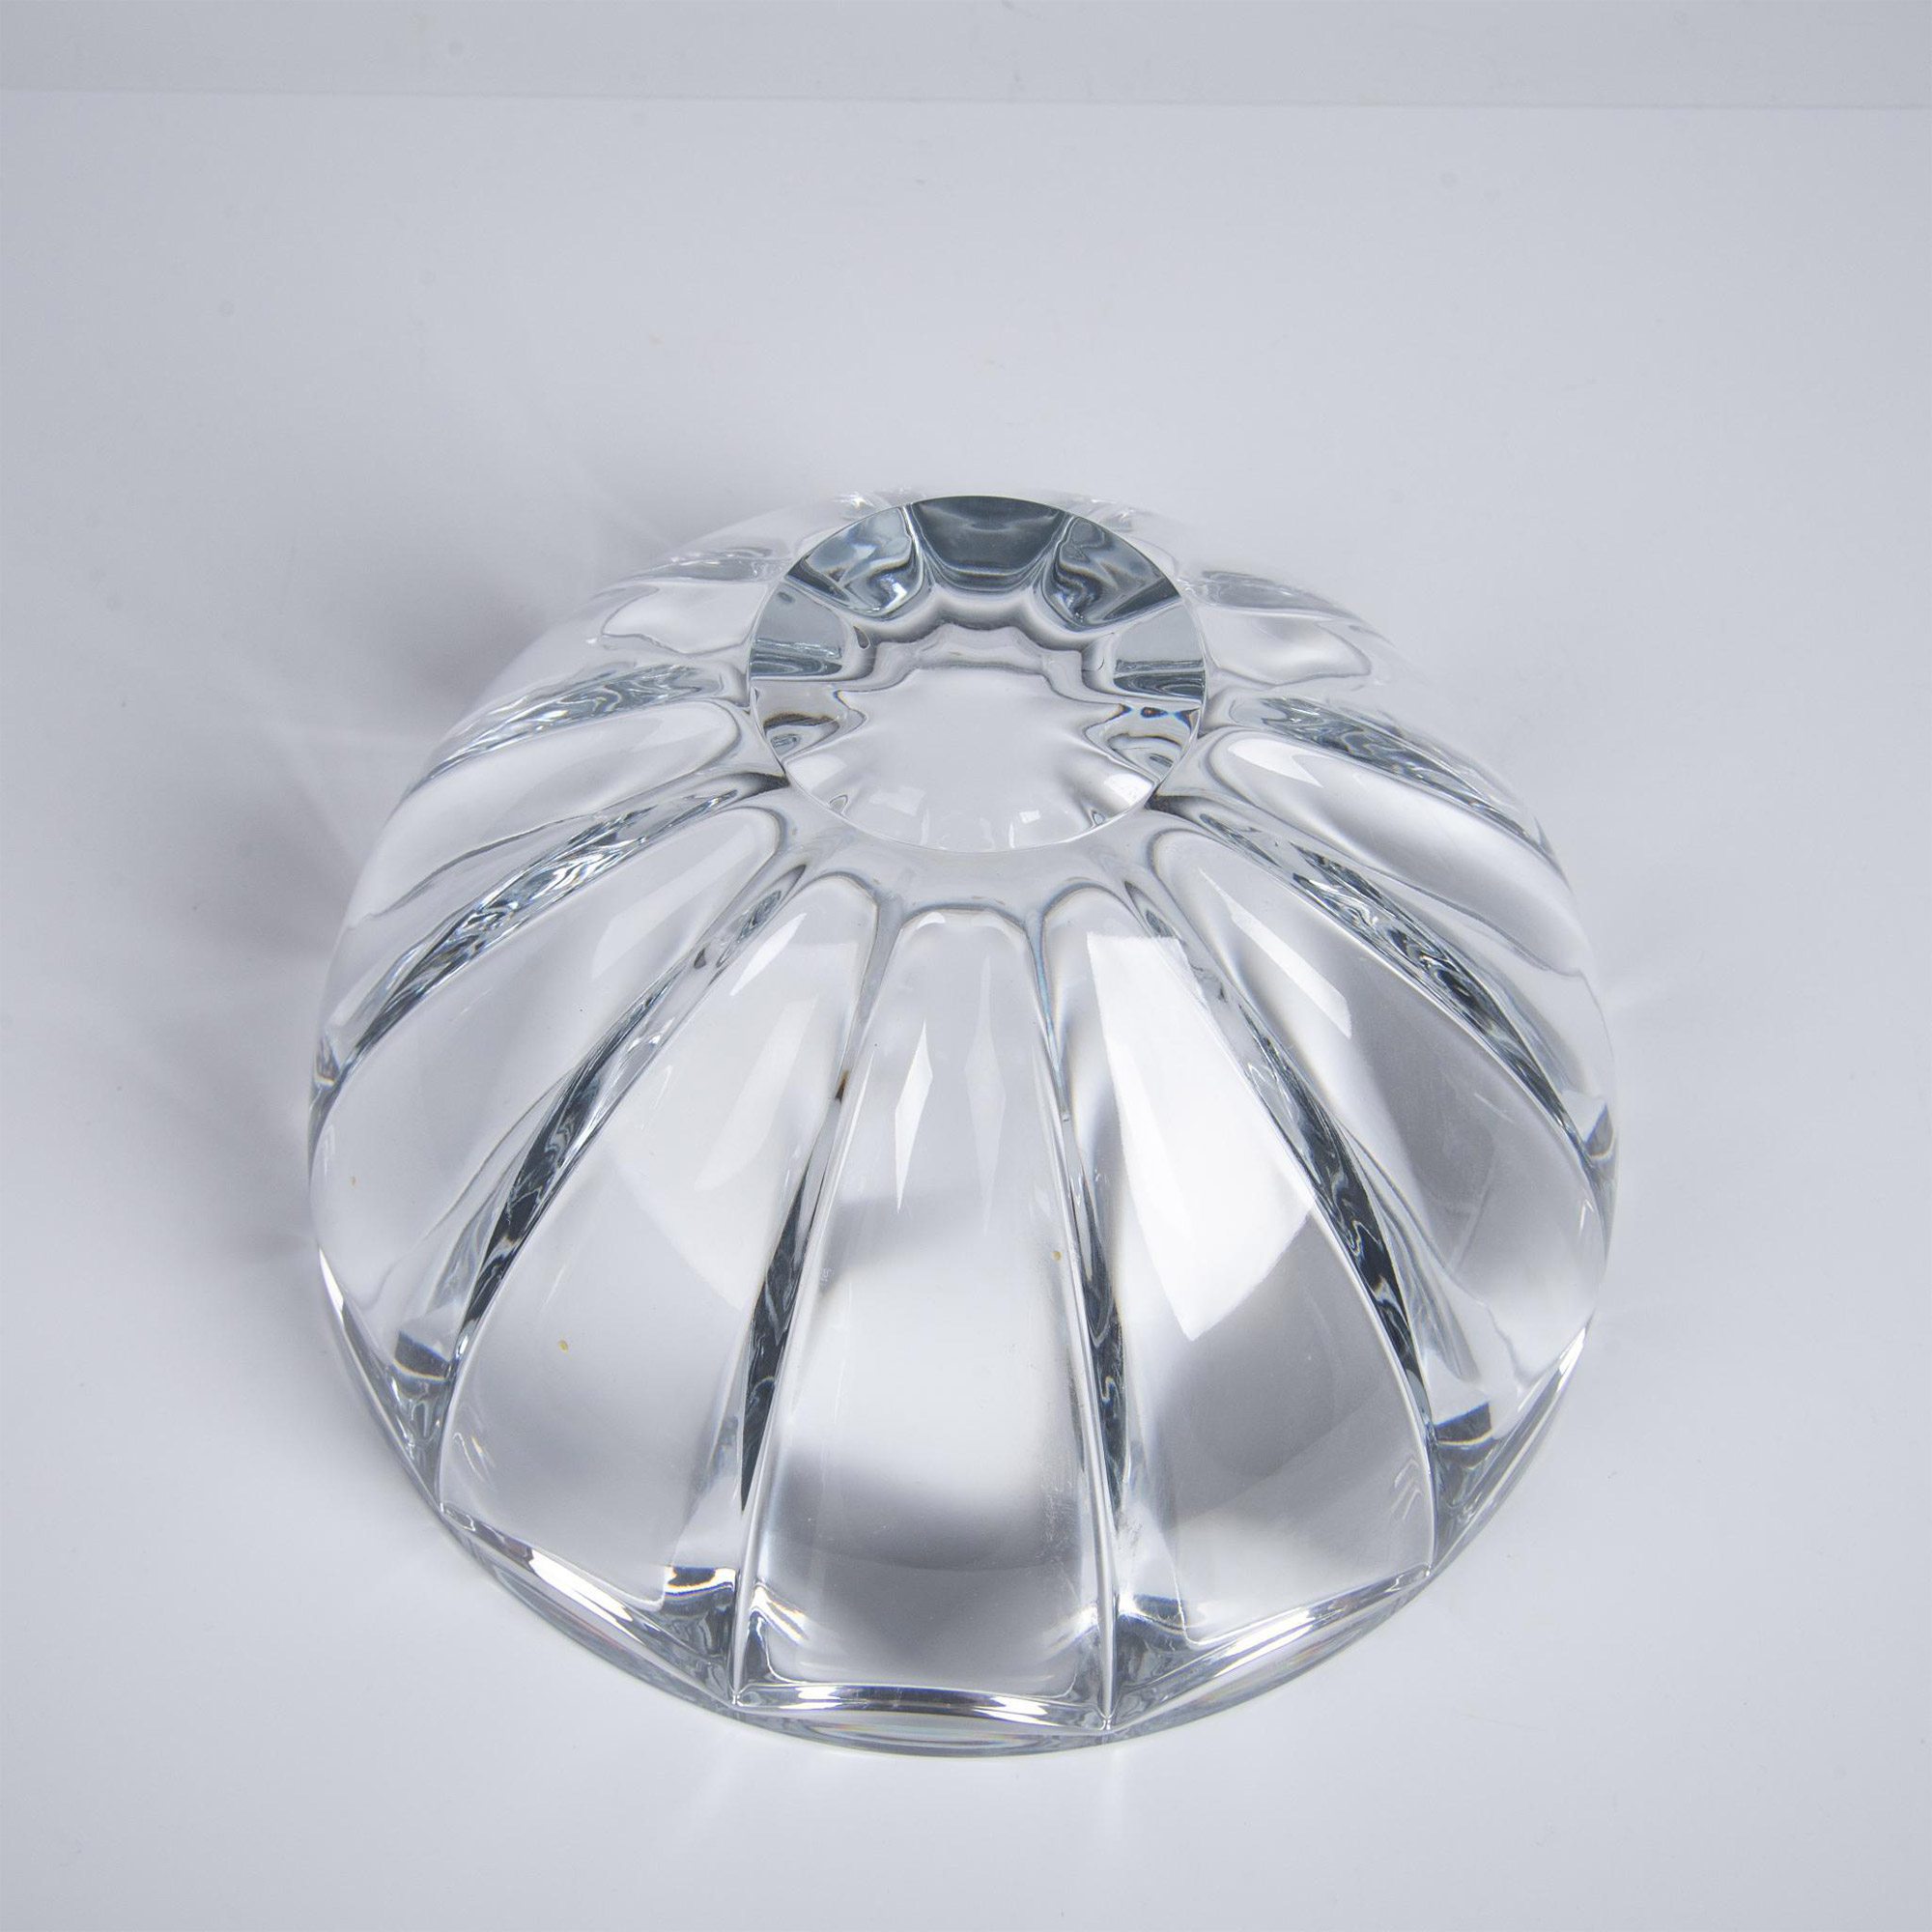 Celebration Crystal Centerpiece Bowl - Image 4 of 4